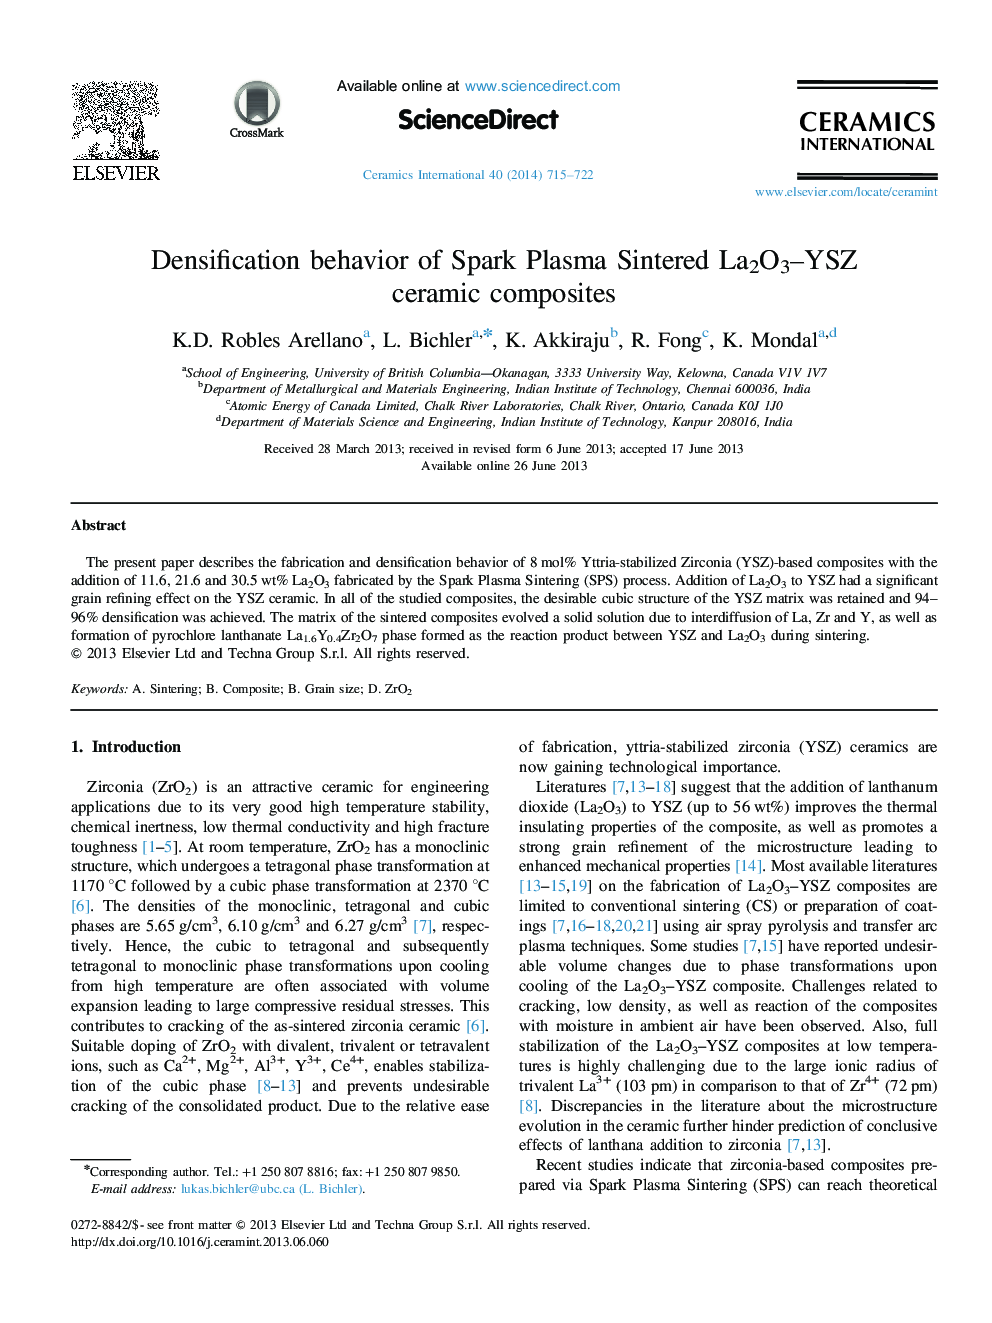 Densification behavior of Spark Plasma Sintered La2O3–YSZ ceramic composites